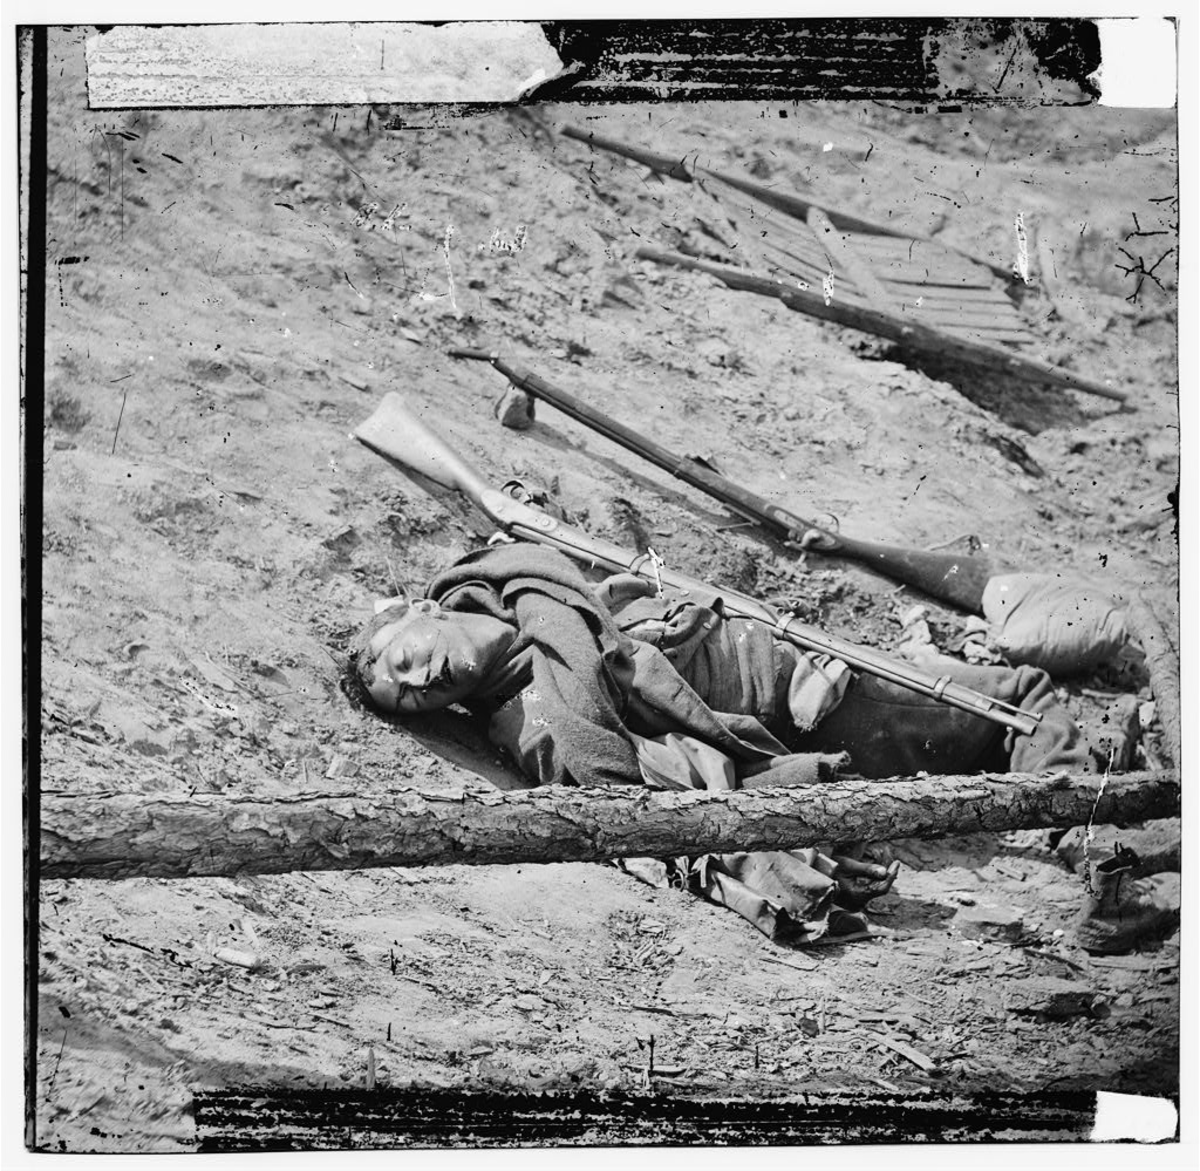 "DEAD CONFEDERATE SOLDIER PETERSBURG VIRGINIA" BY MATHEW BRADY IN 1865